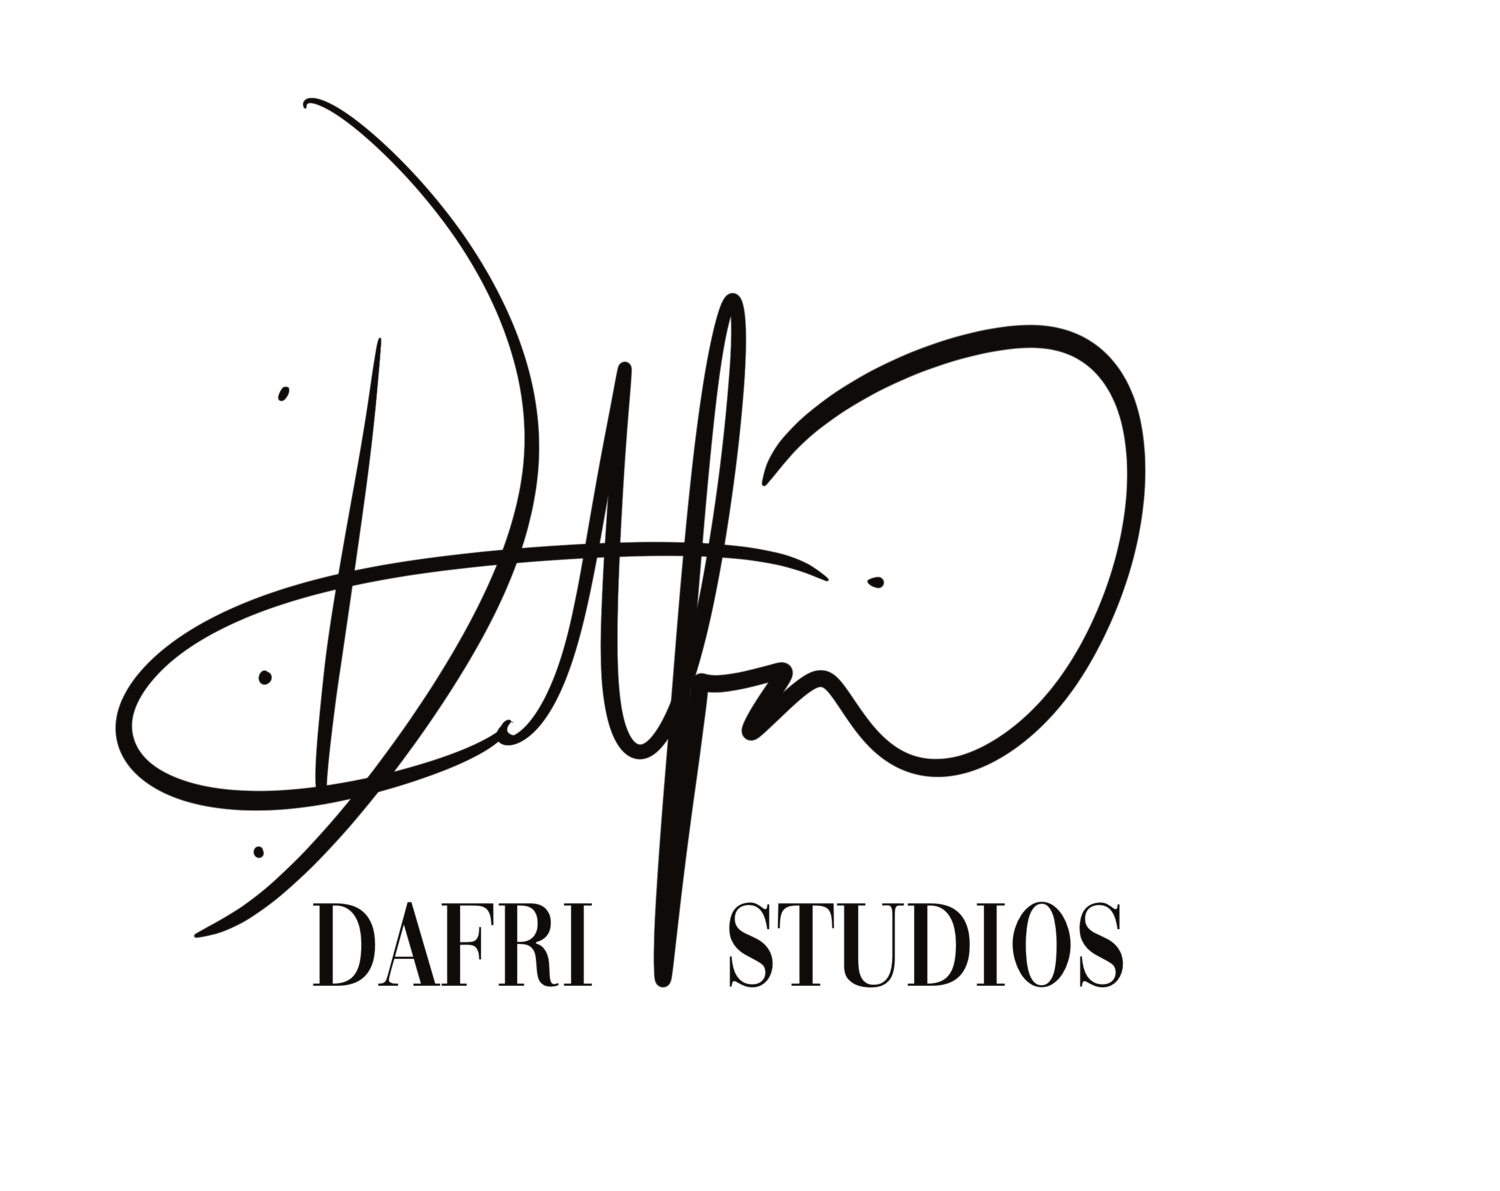 Dafri Studios